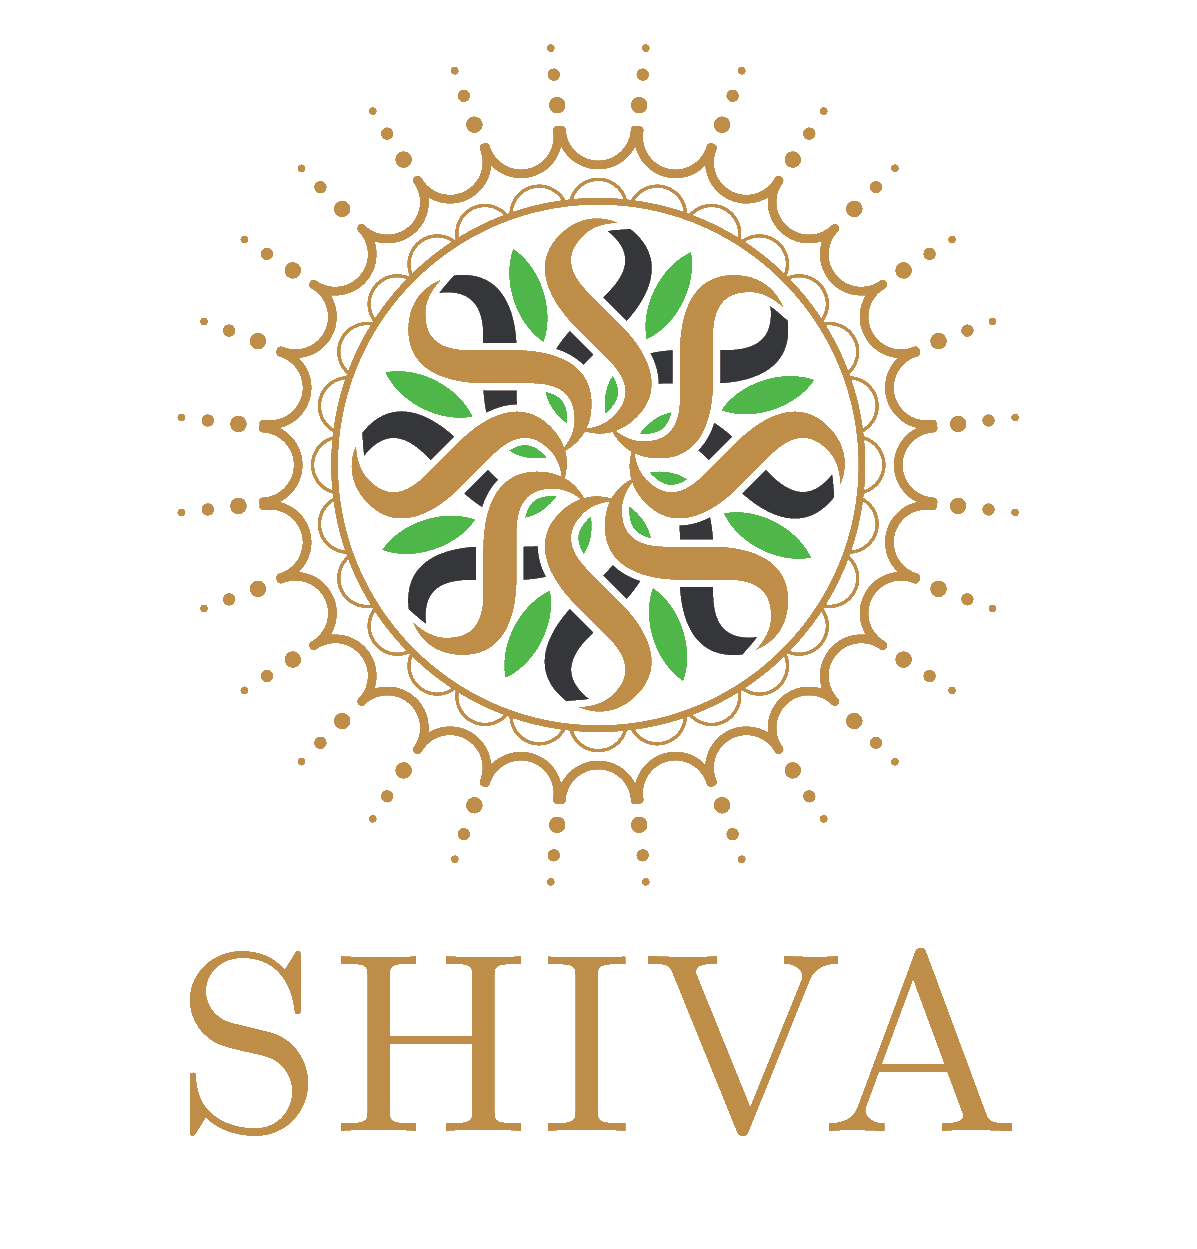 Shiva Name Logo | Photos of lord shiva, Text on photo, Shiva name logo  design